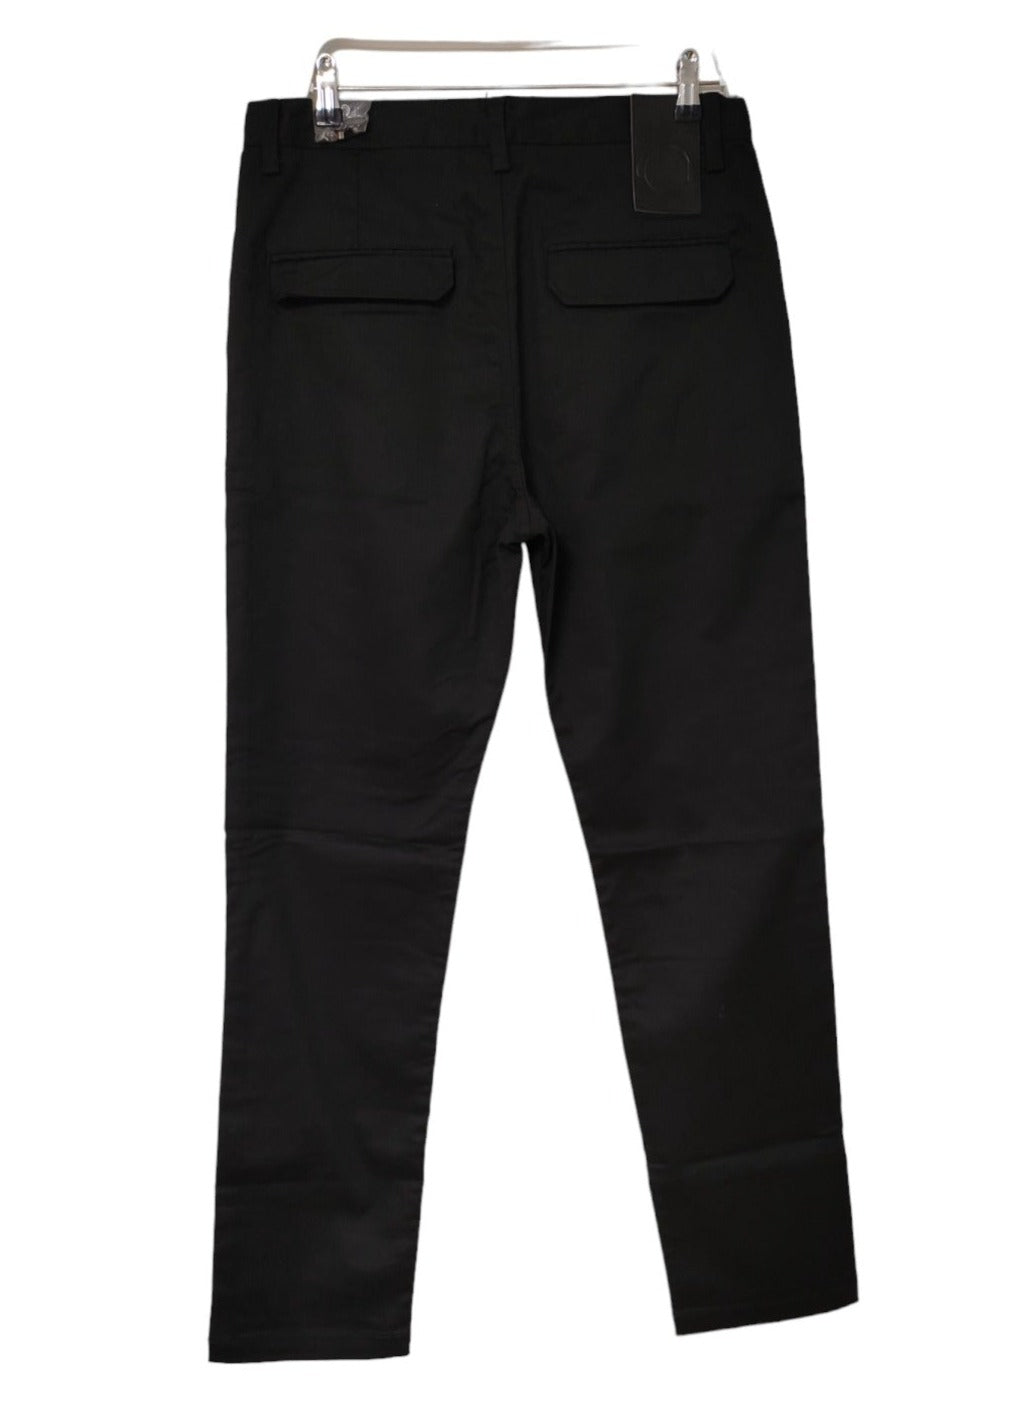 Stock Aνδρικό Denim Παντελόνι HUMOR σε Μαύρο χρώμα (Νο31 - Medium)